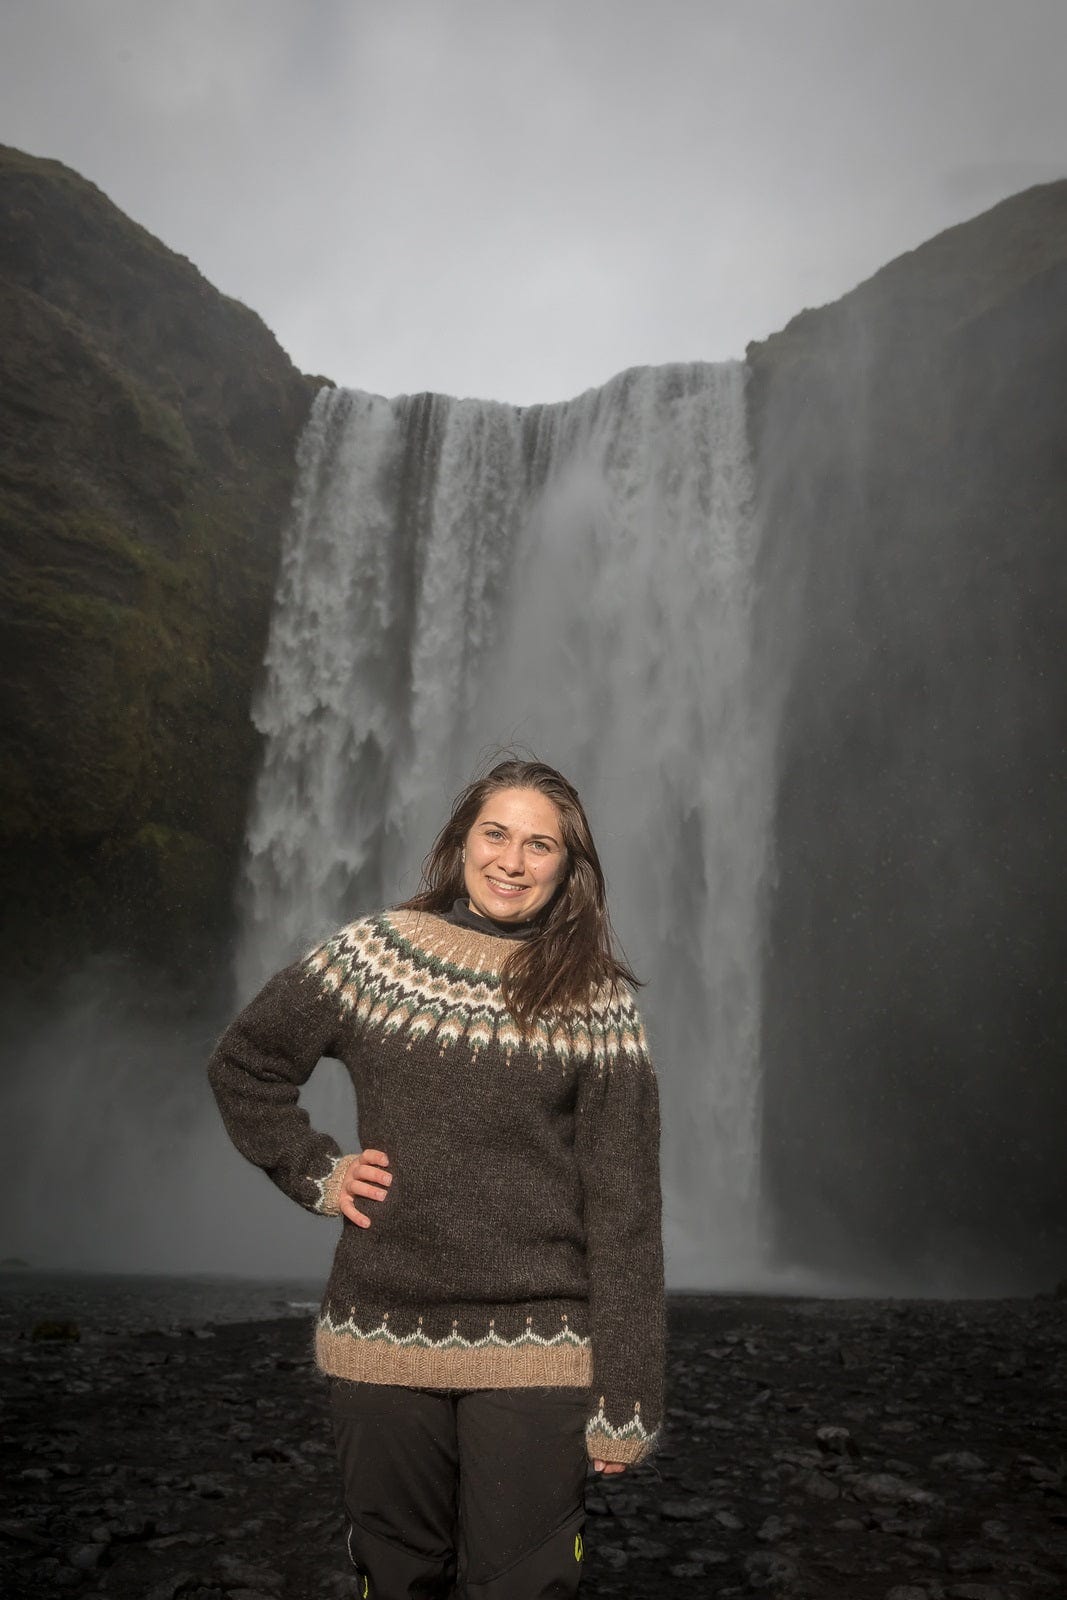 Hennie Icelandic Sweater Black Heather - Knitting Kit - The Icelandic Store